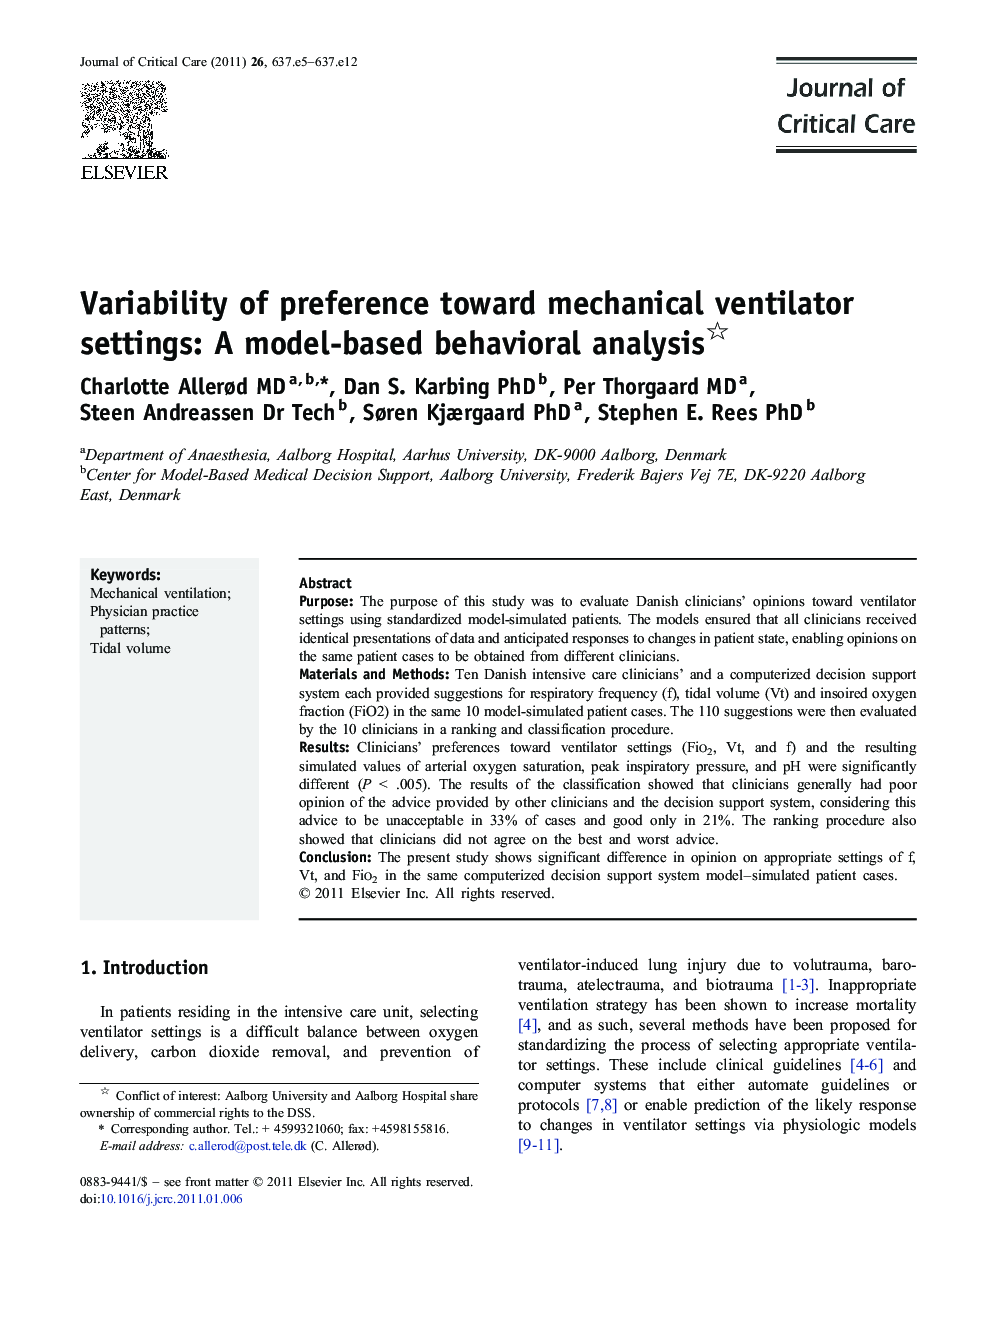 Variability of preference toward mechanical ventilator settings: A model-based behavioral analysis